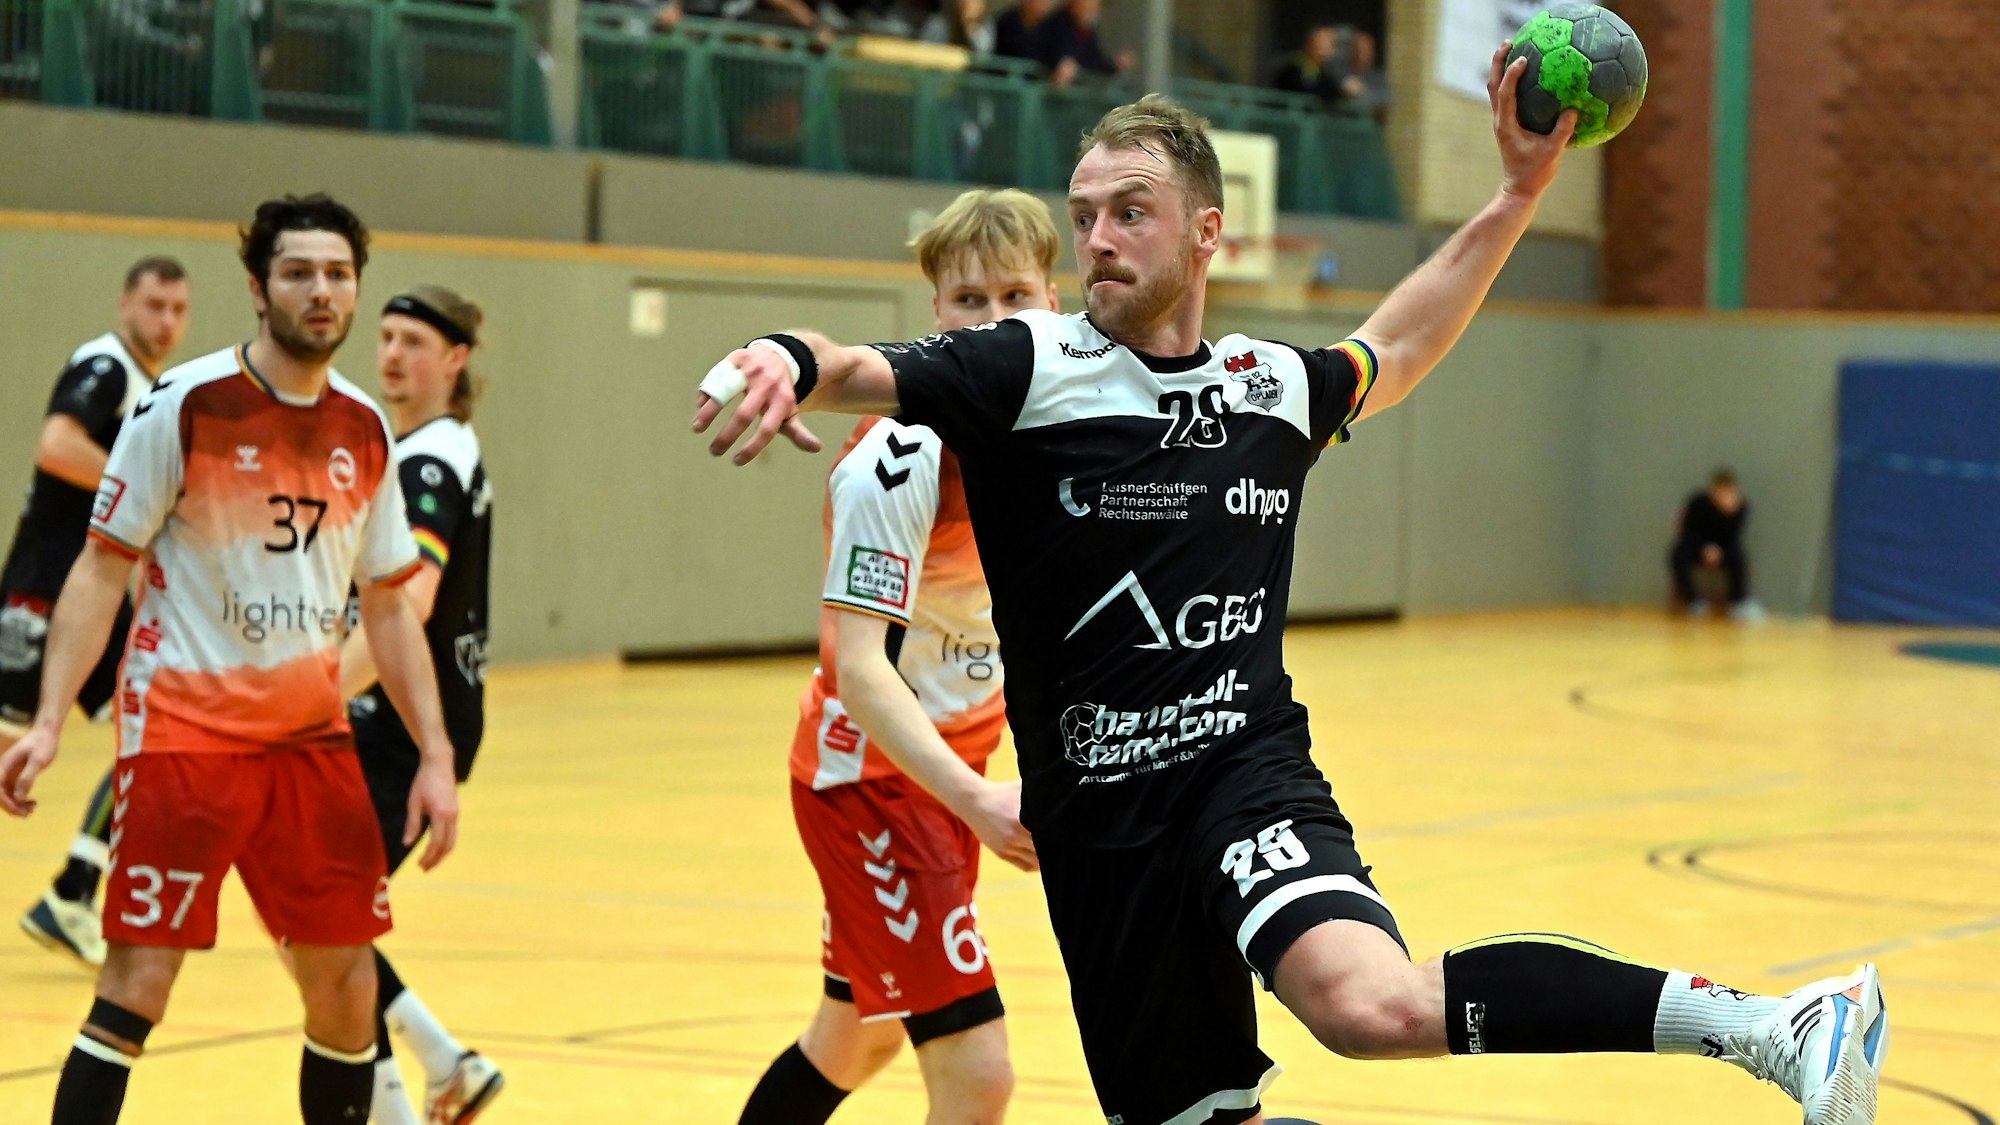 04.02.2023, Handball-Tus Opladen-Hamm

rechts: Markus Sonnenberg (Opladen)

Foto: Uli Herhaus